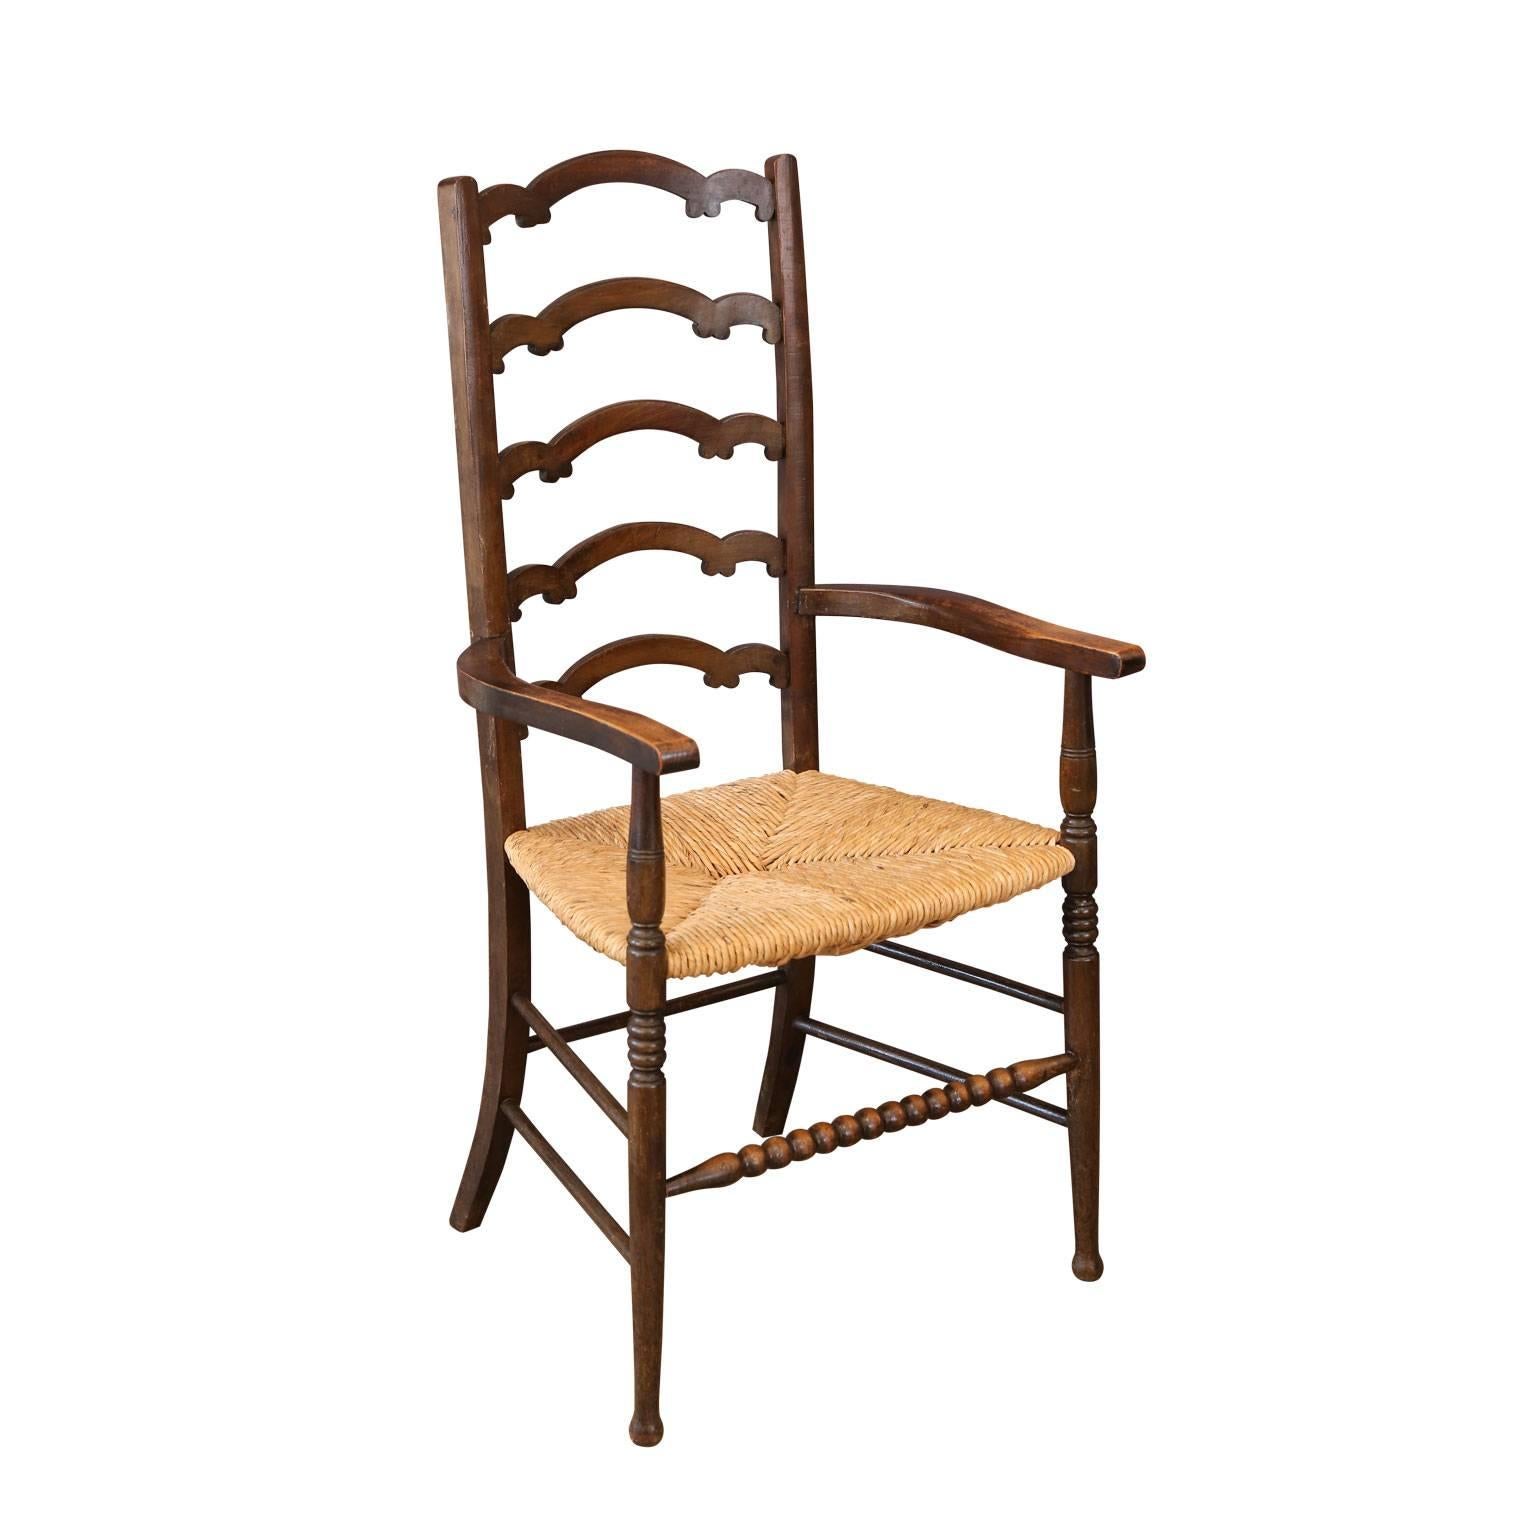 Edwardian Unique Ladder-Back Chairs